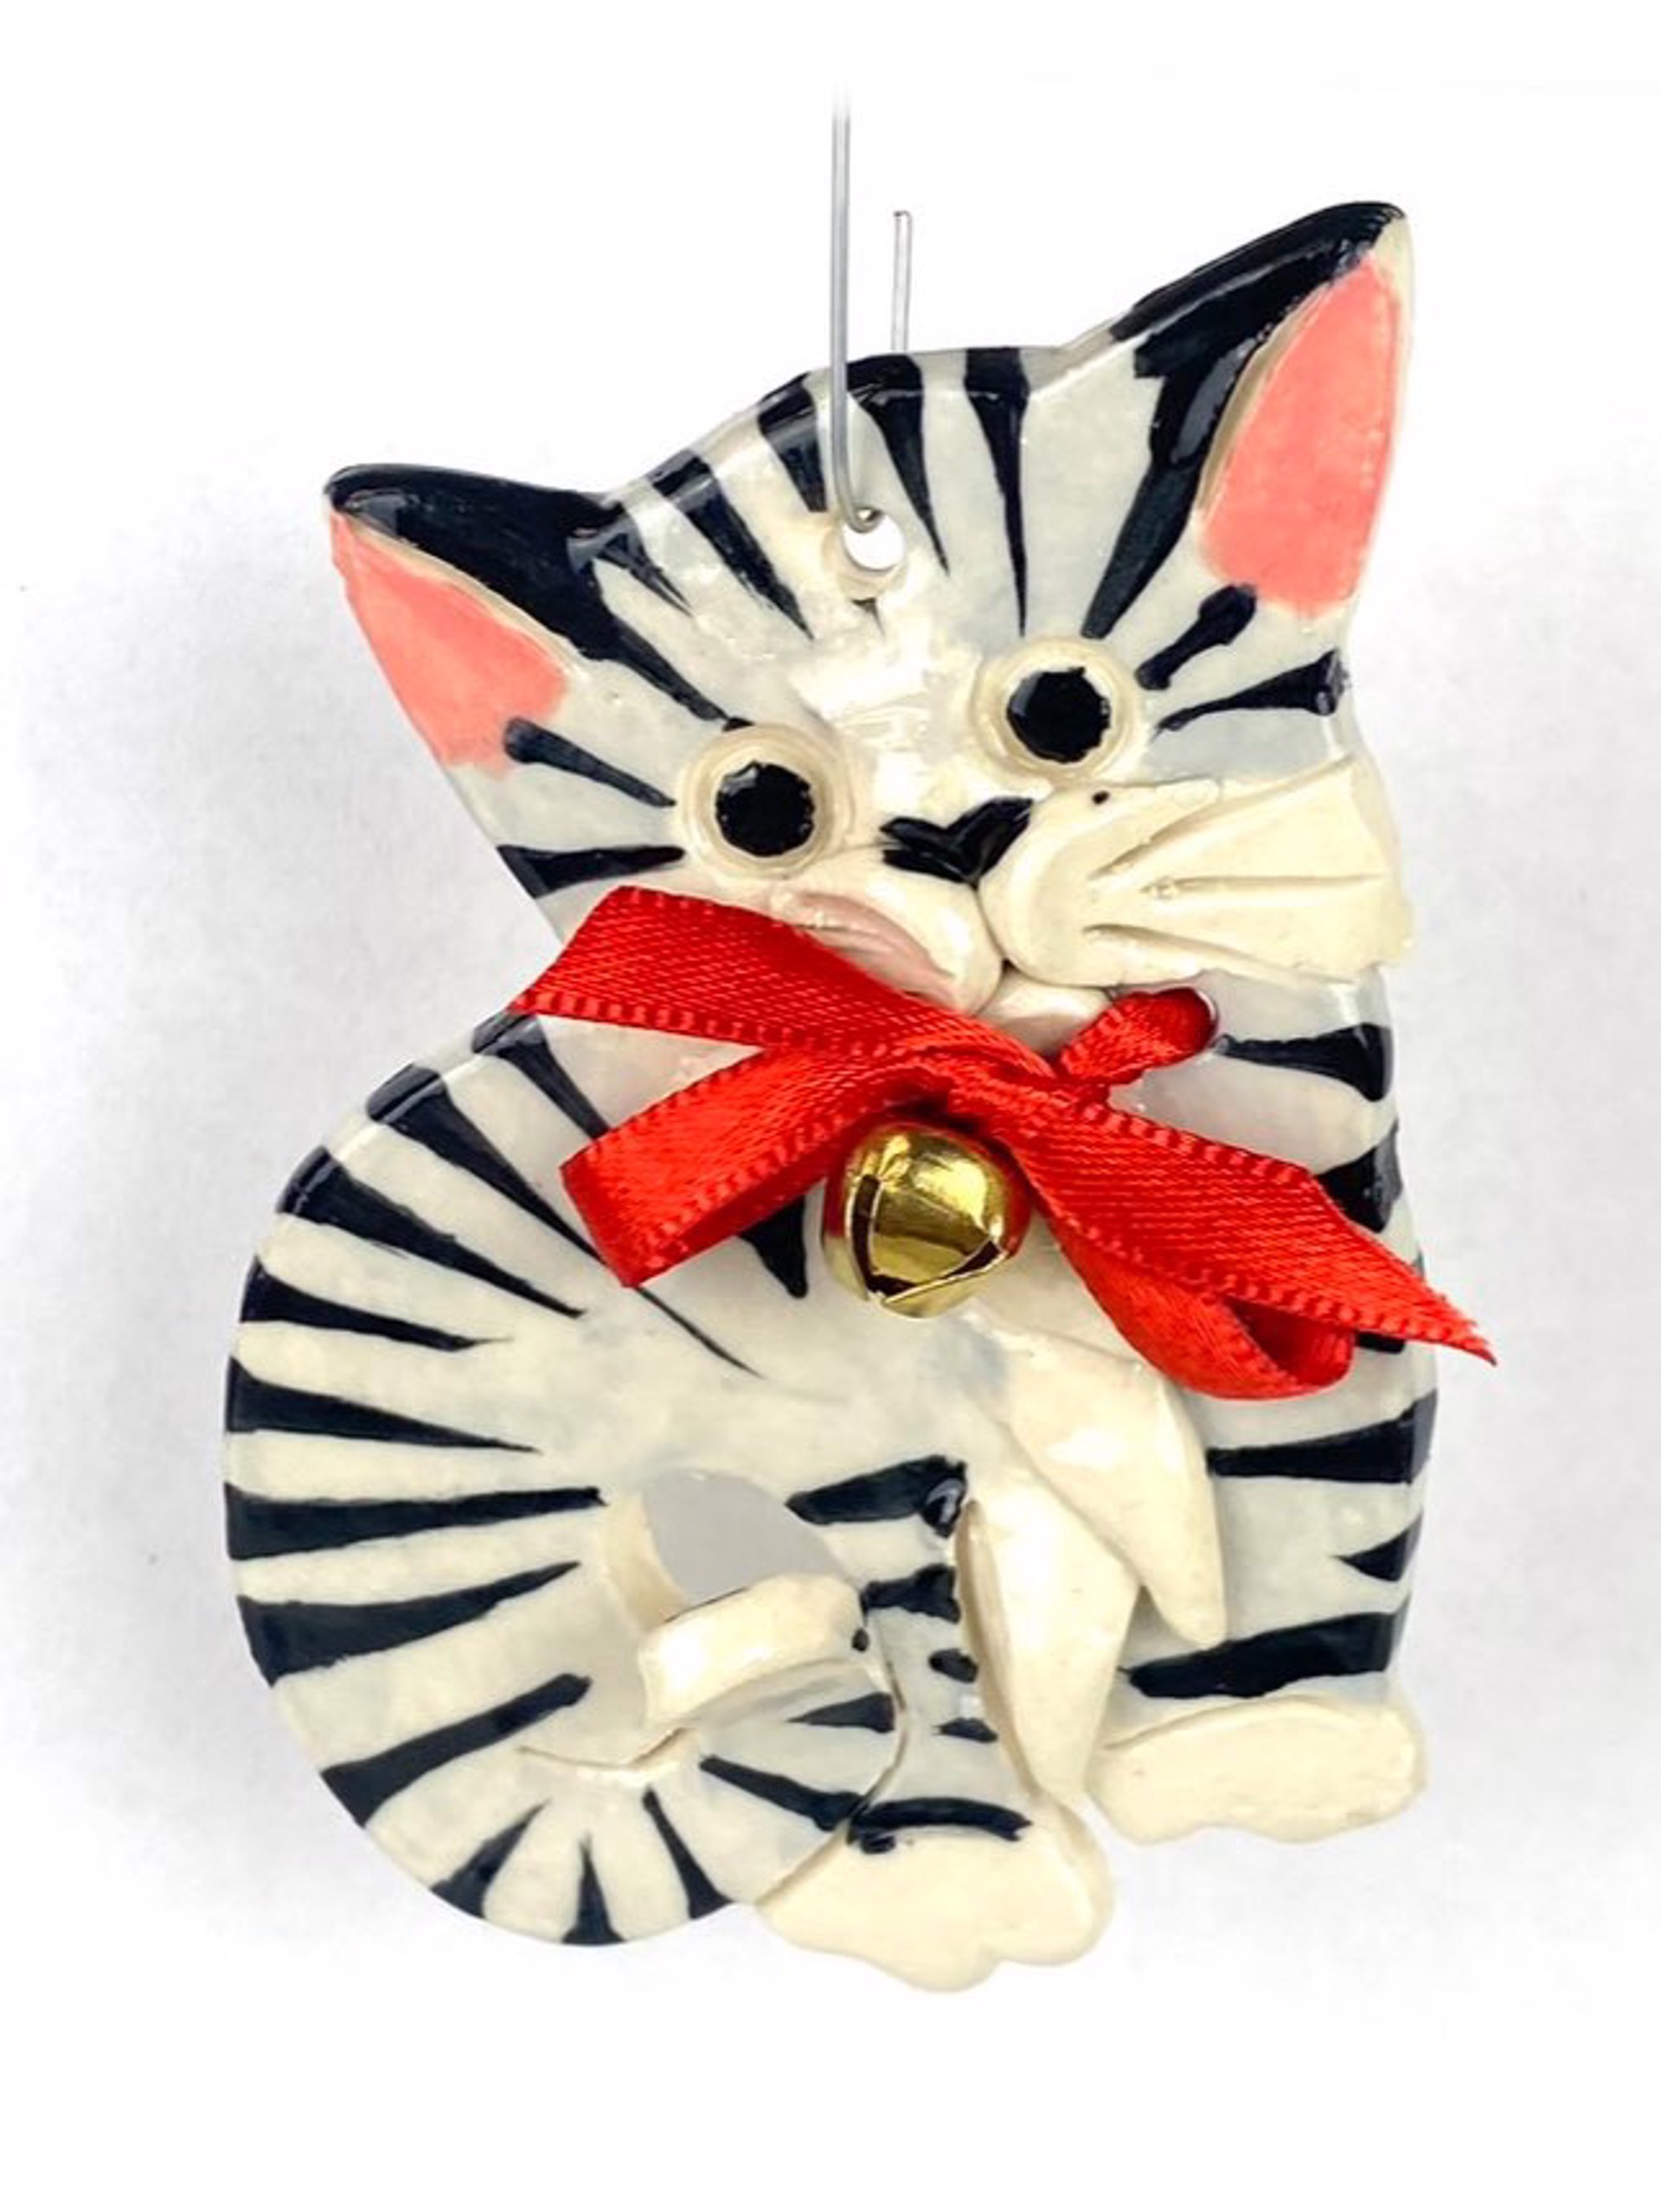 Cat Ornament by Nancy Jacobsohn